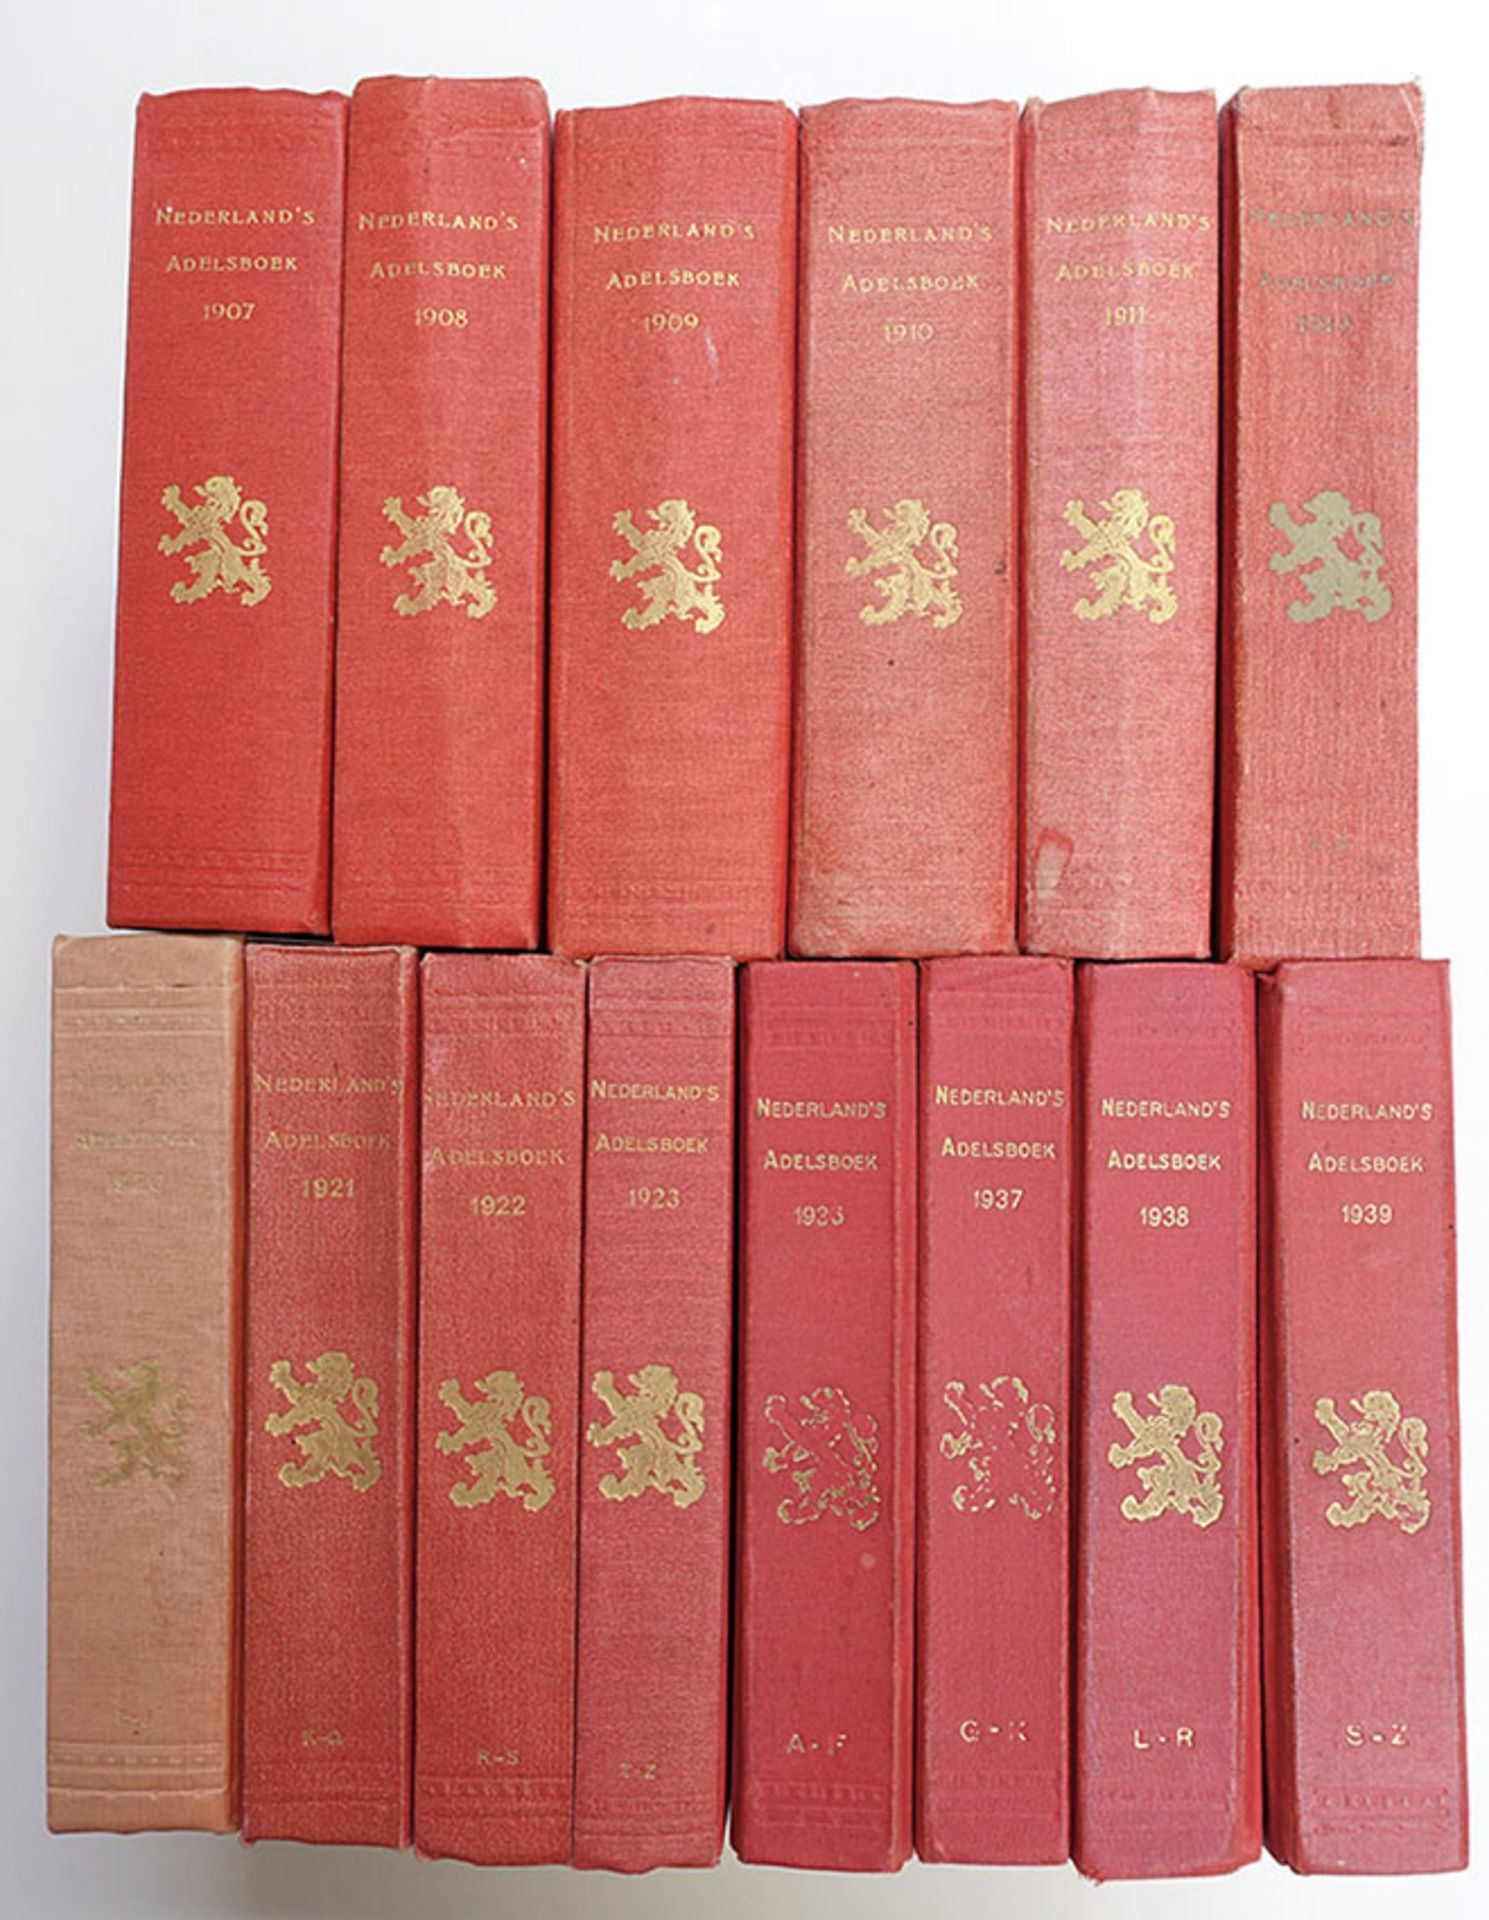 NEDERLAND'S ADELSBOEK. Jg. 5-9, 17-21, 34-37. 's-Grav., 1907-39. 14 vols. Sm-8°. Ocl.